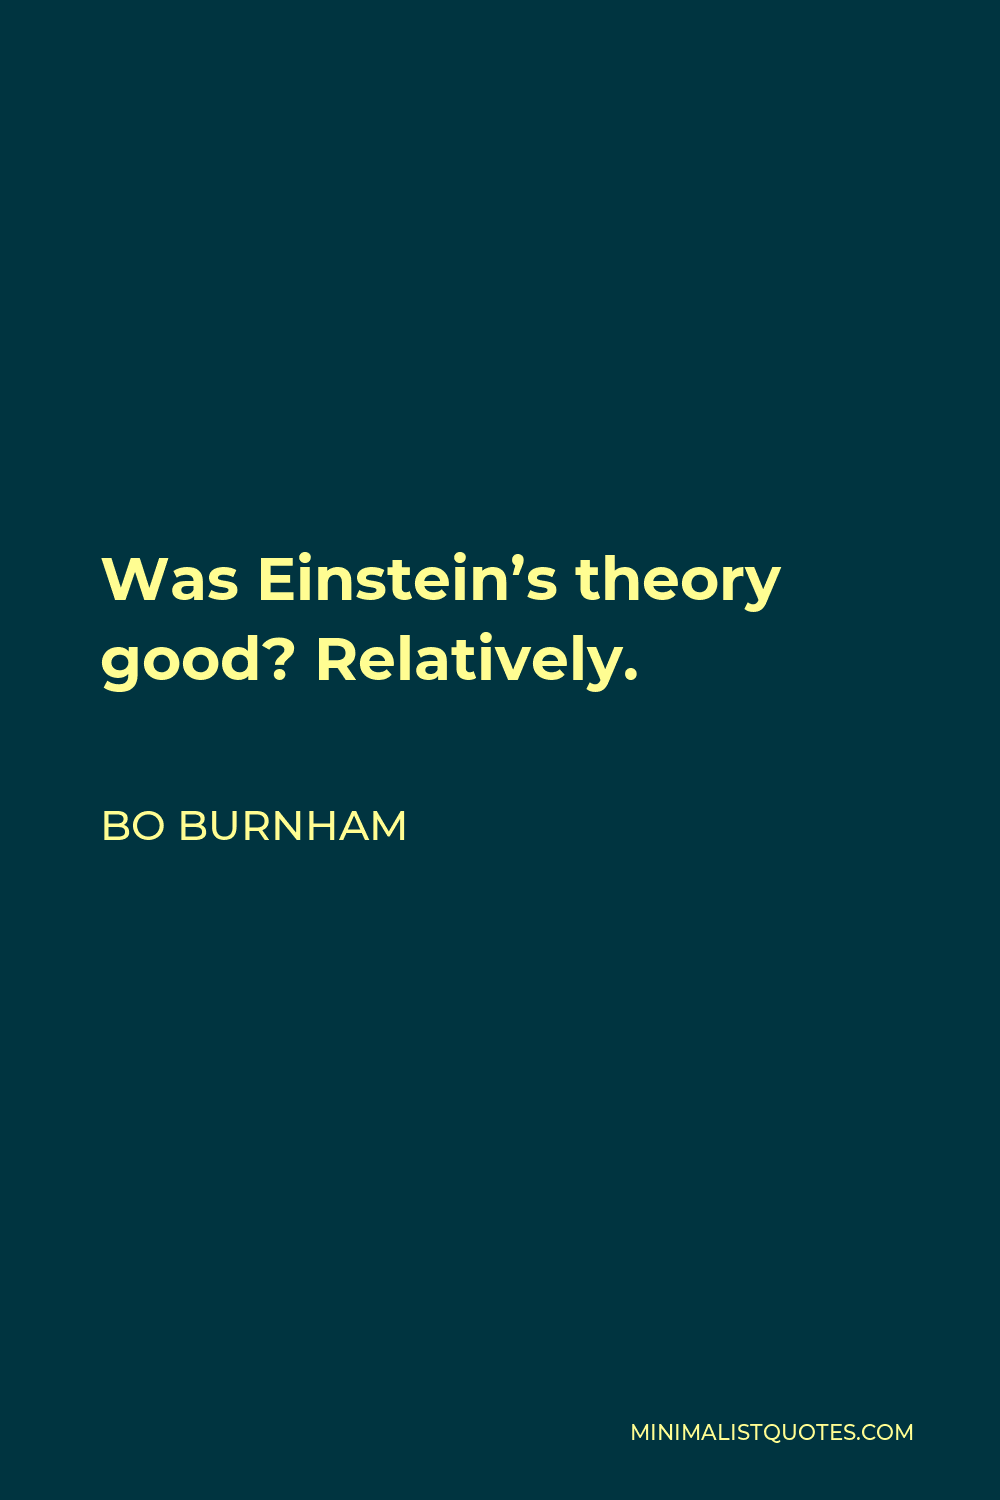 Bo Burnham Quote - Was Einstein’s theory good? Relatively.